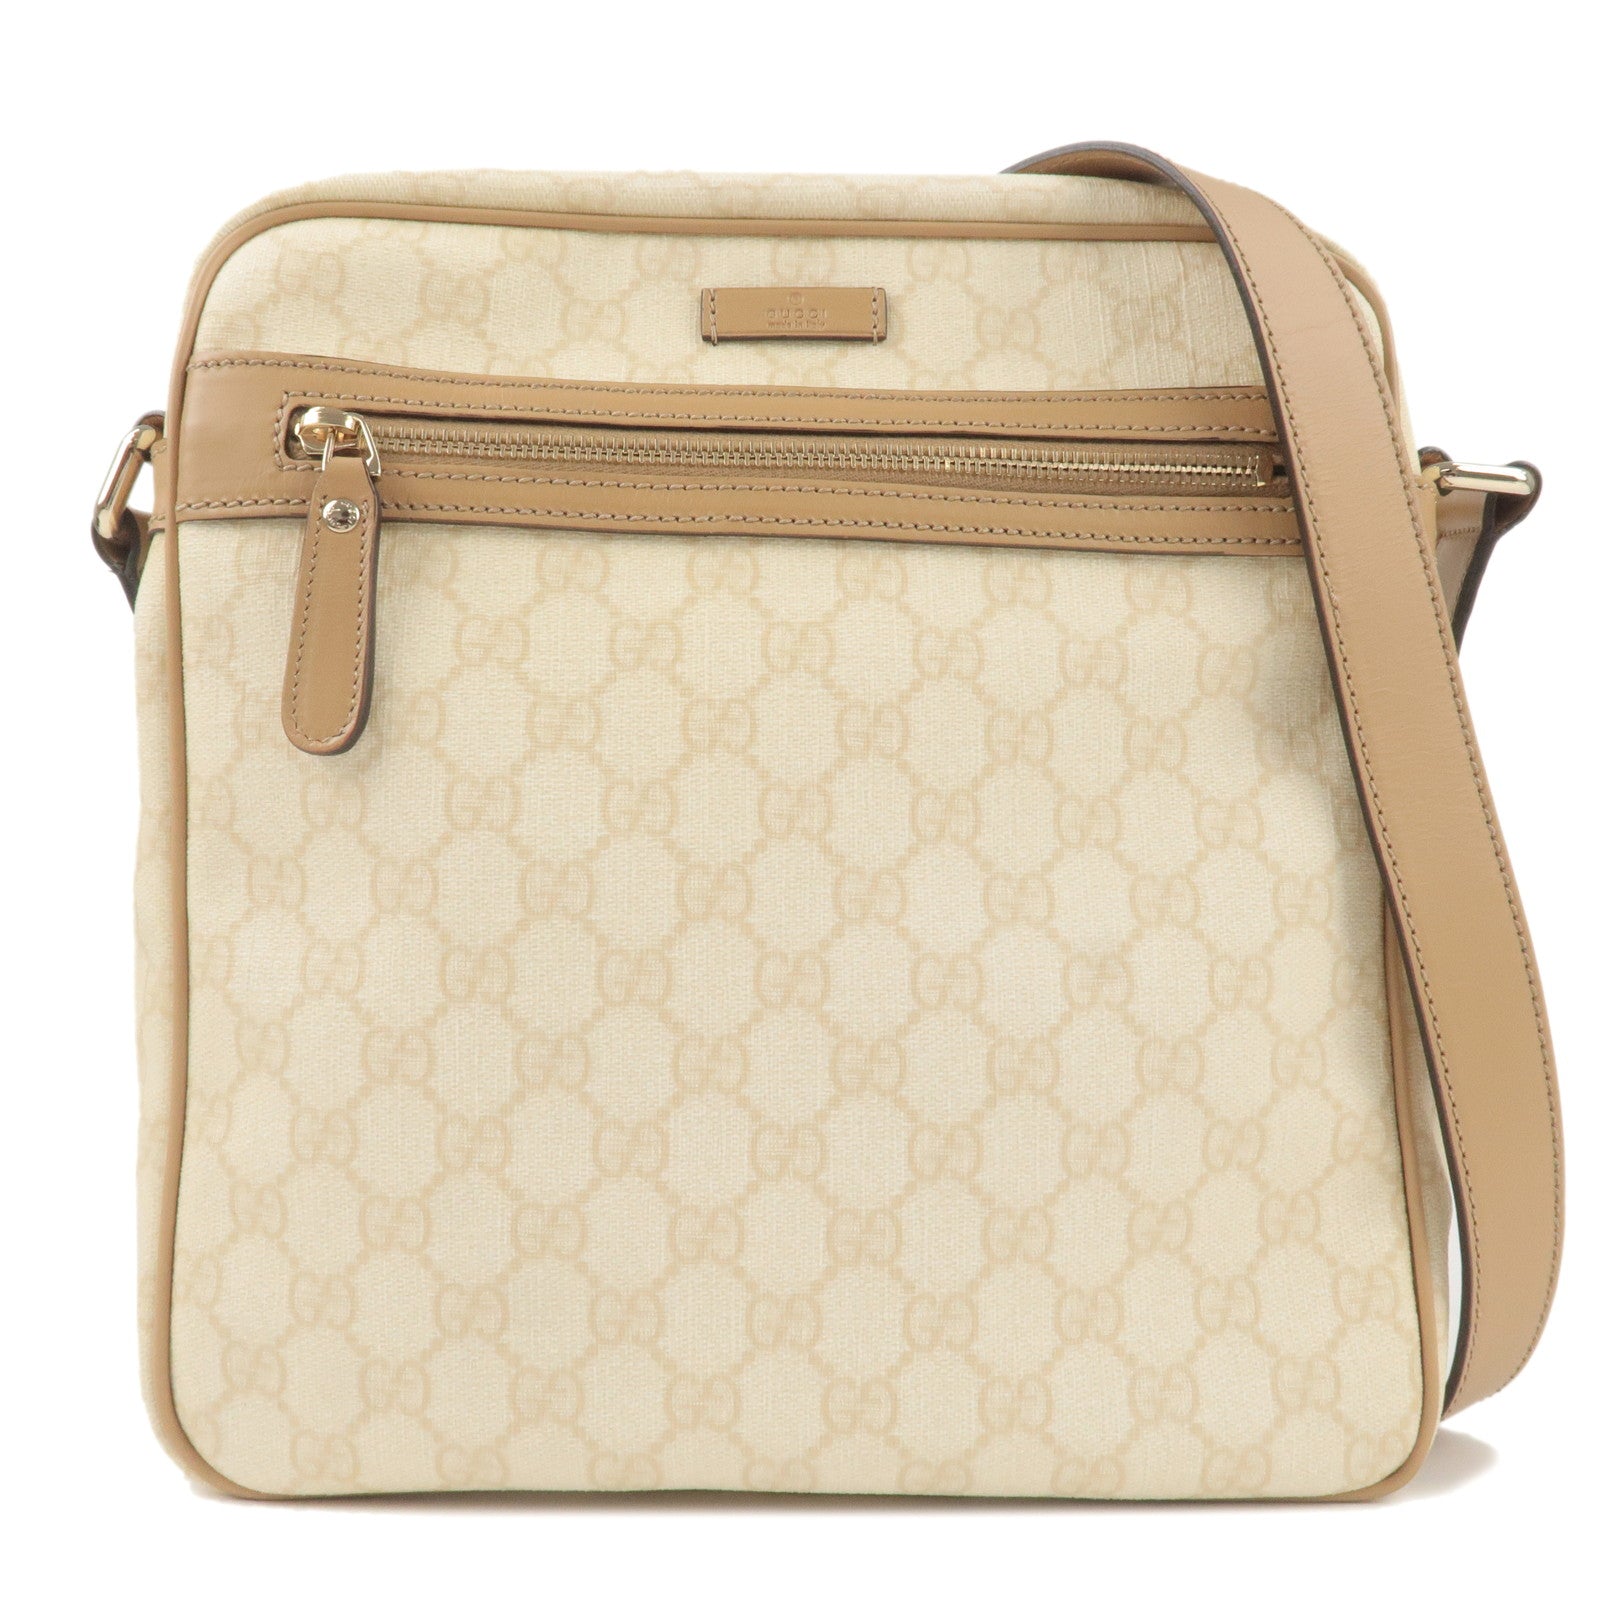 Gucci GG Supreme Canvas Messenger Bag Beige